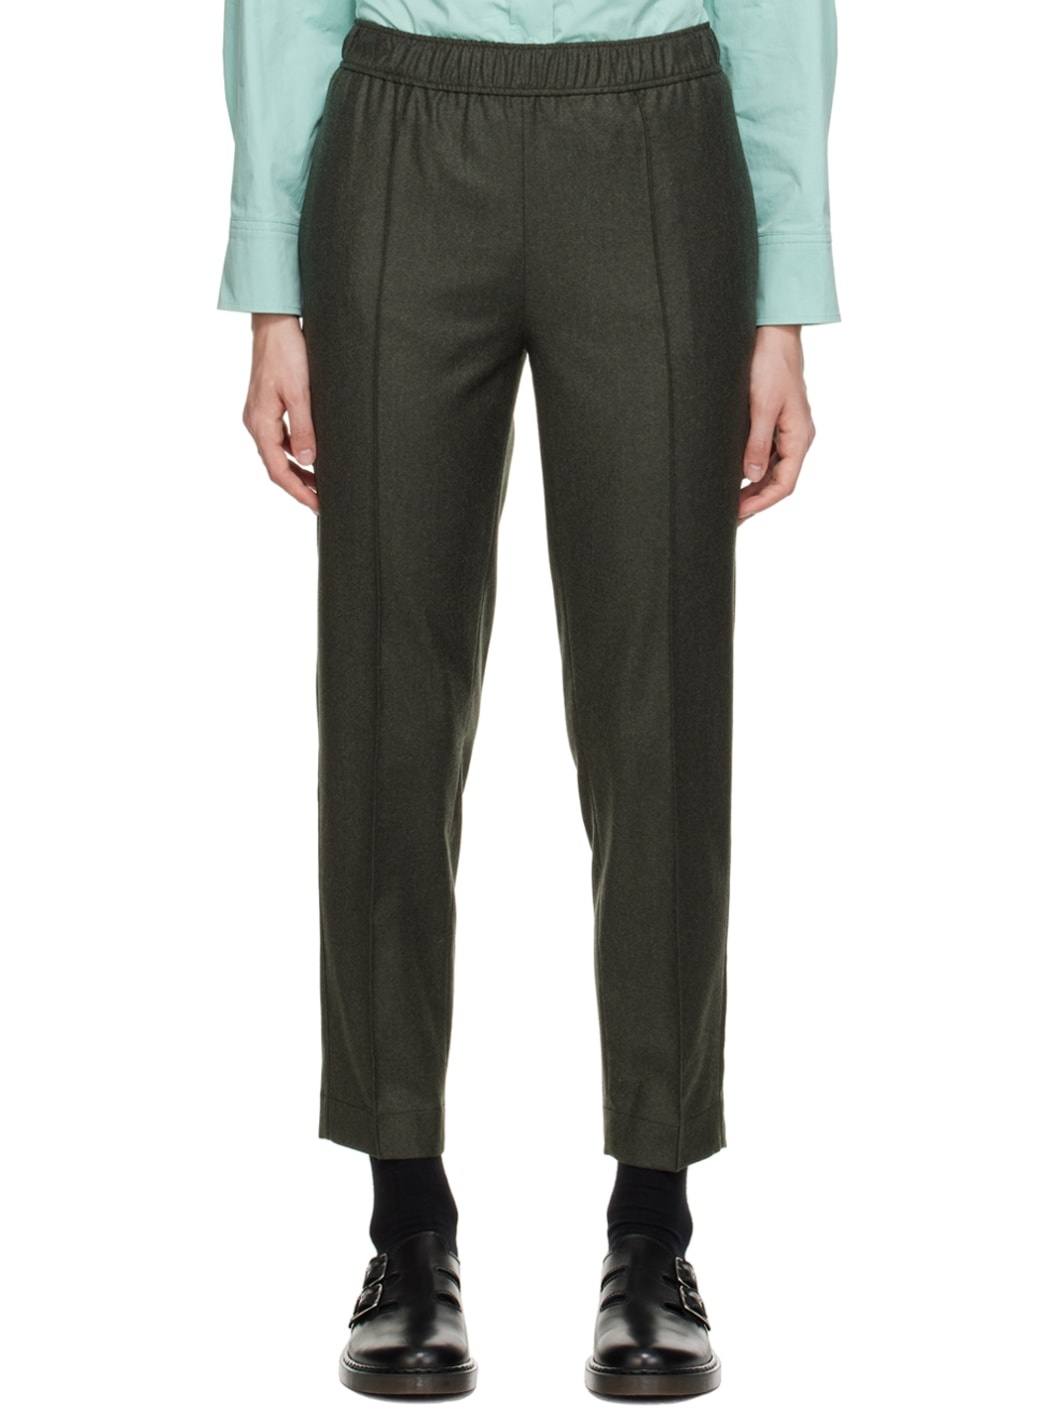 Khaki Garance Trousers - 1